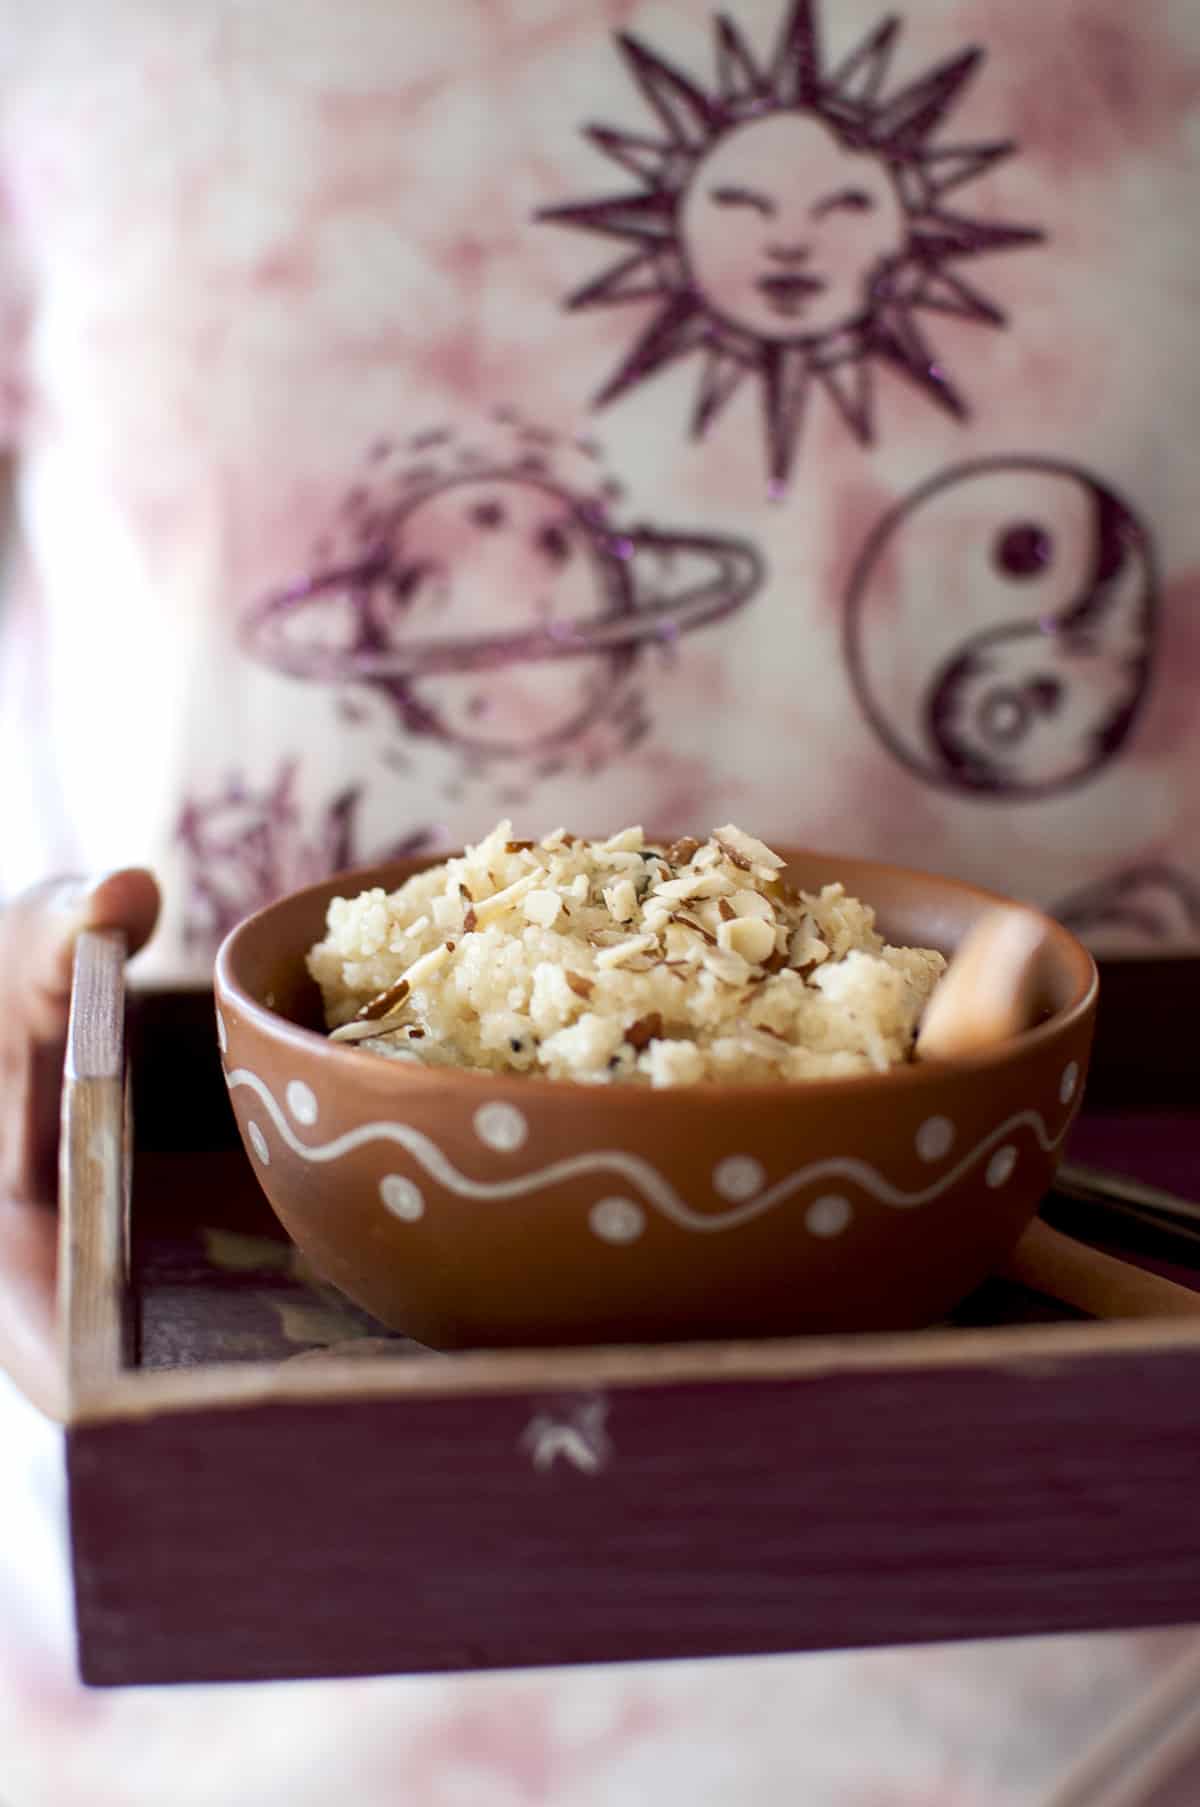 Hand holding a burgundy tray with a bowl of sooji halwa